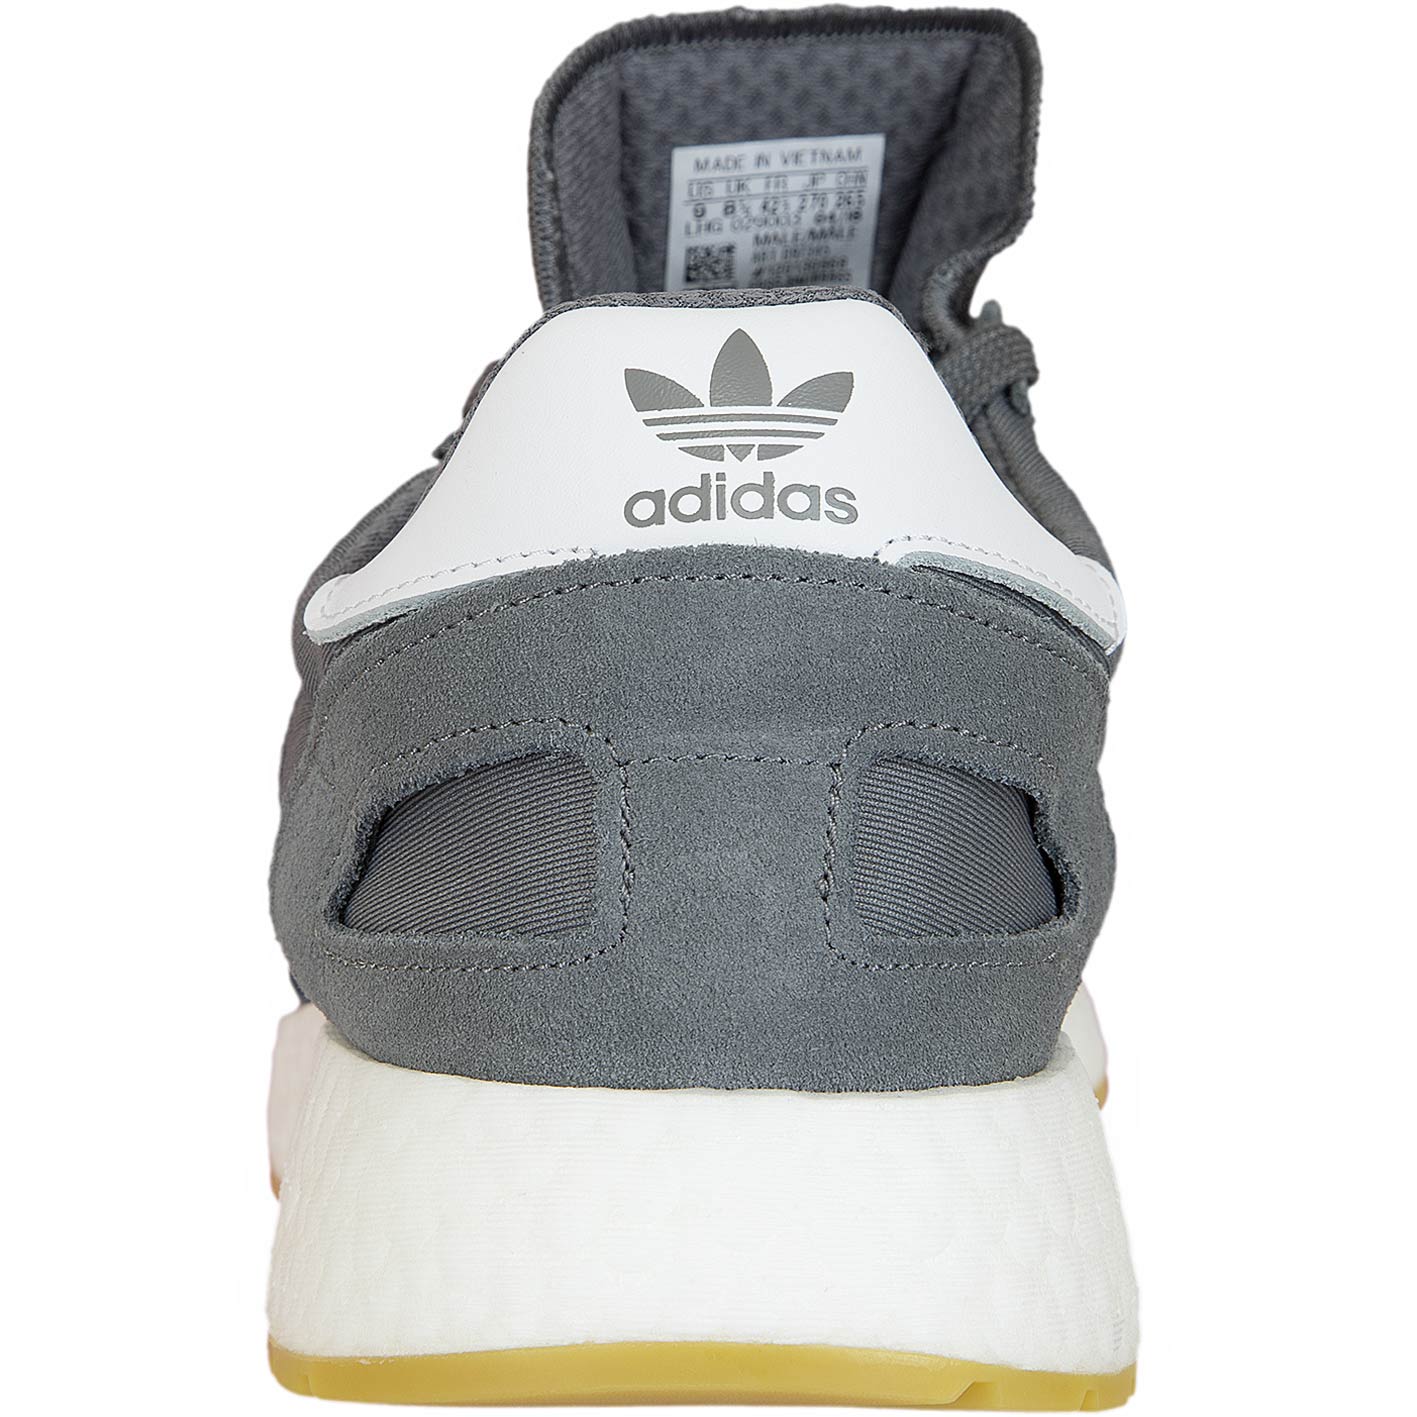 ☆ Adidas Originals Sneaker I-5923 grau - hier bestellen!